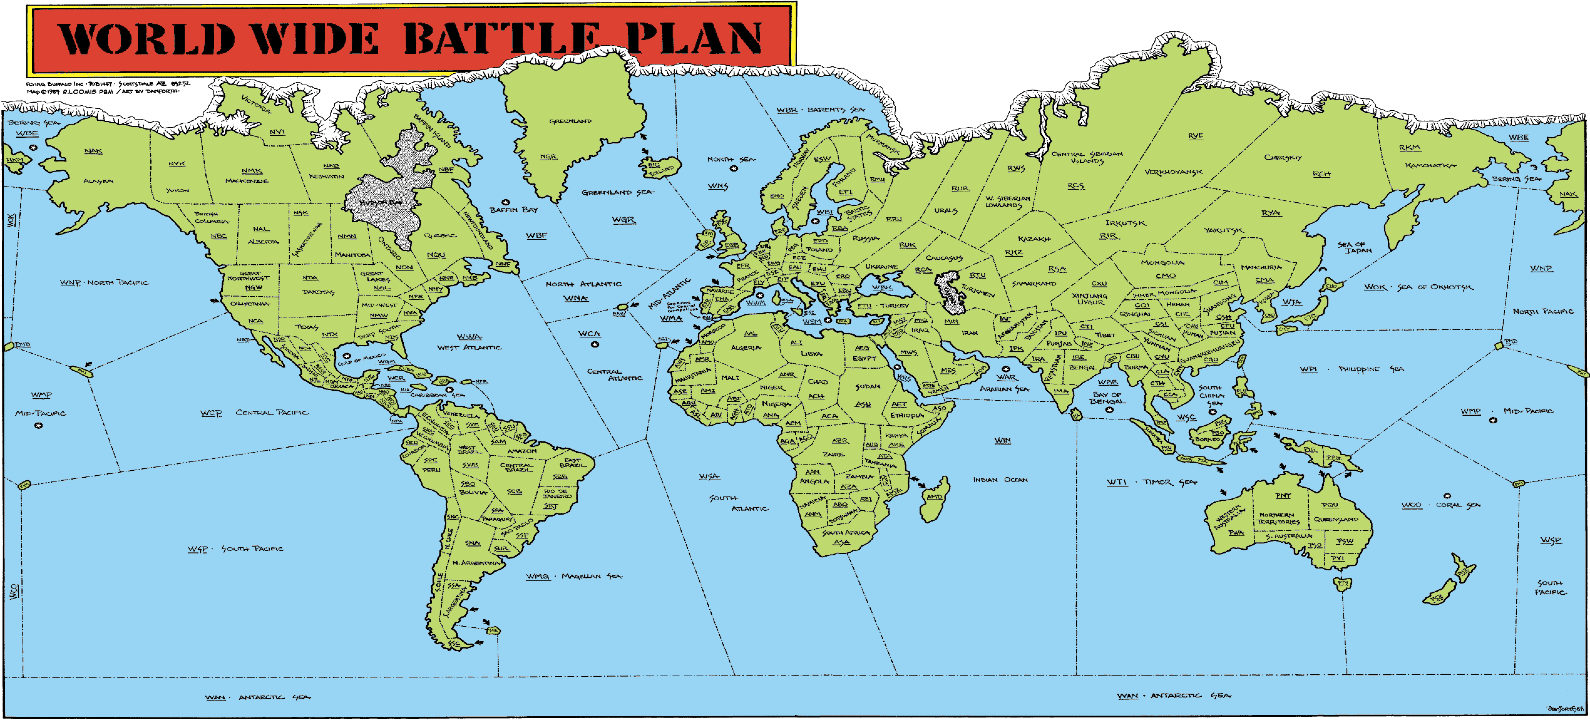 World Wide Battle Plan map image